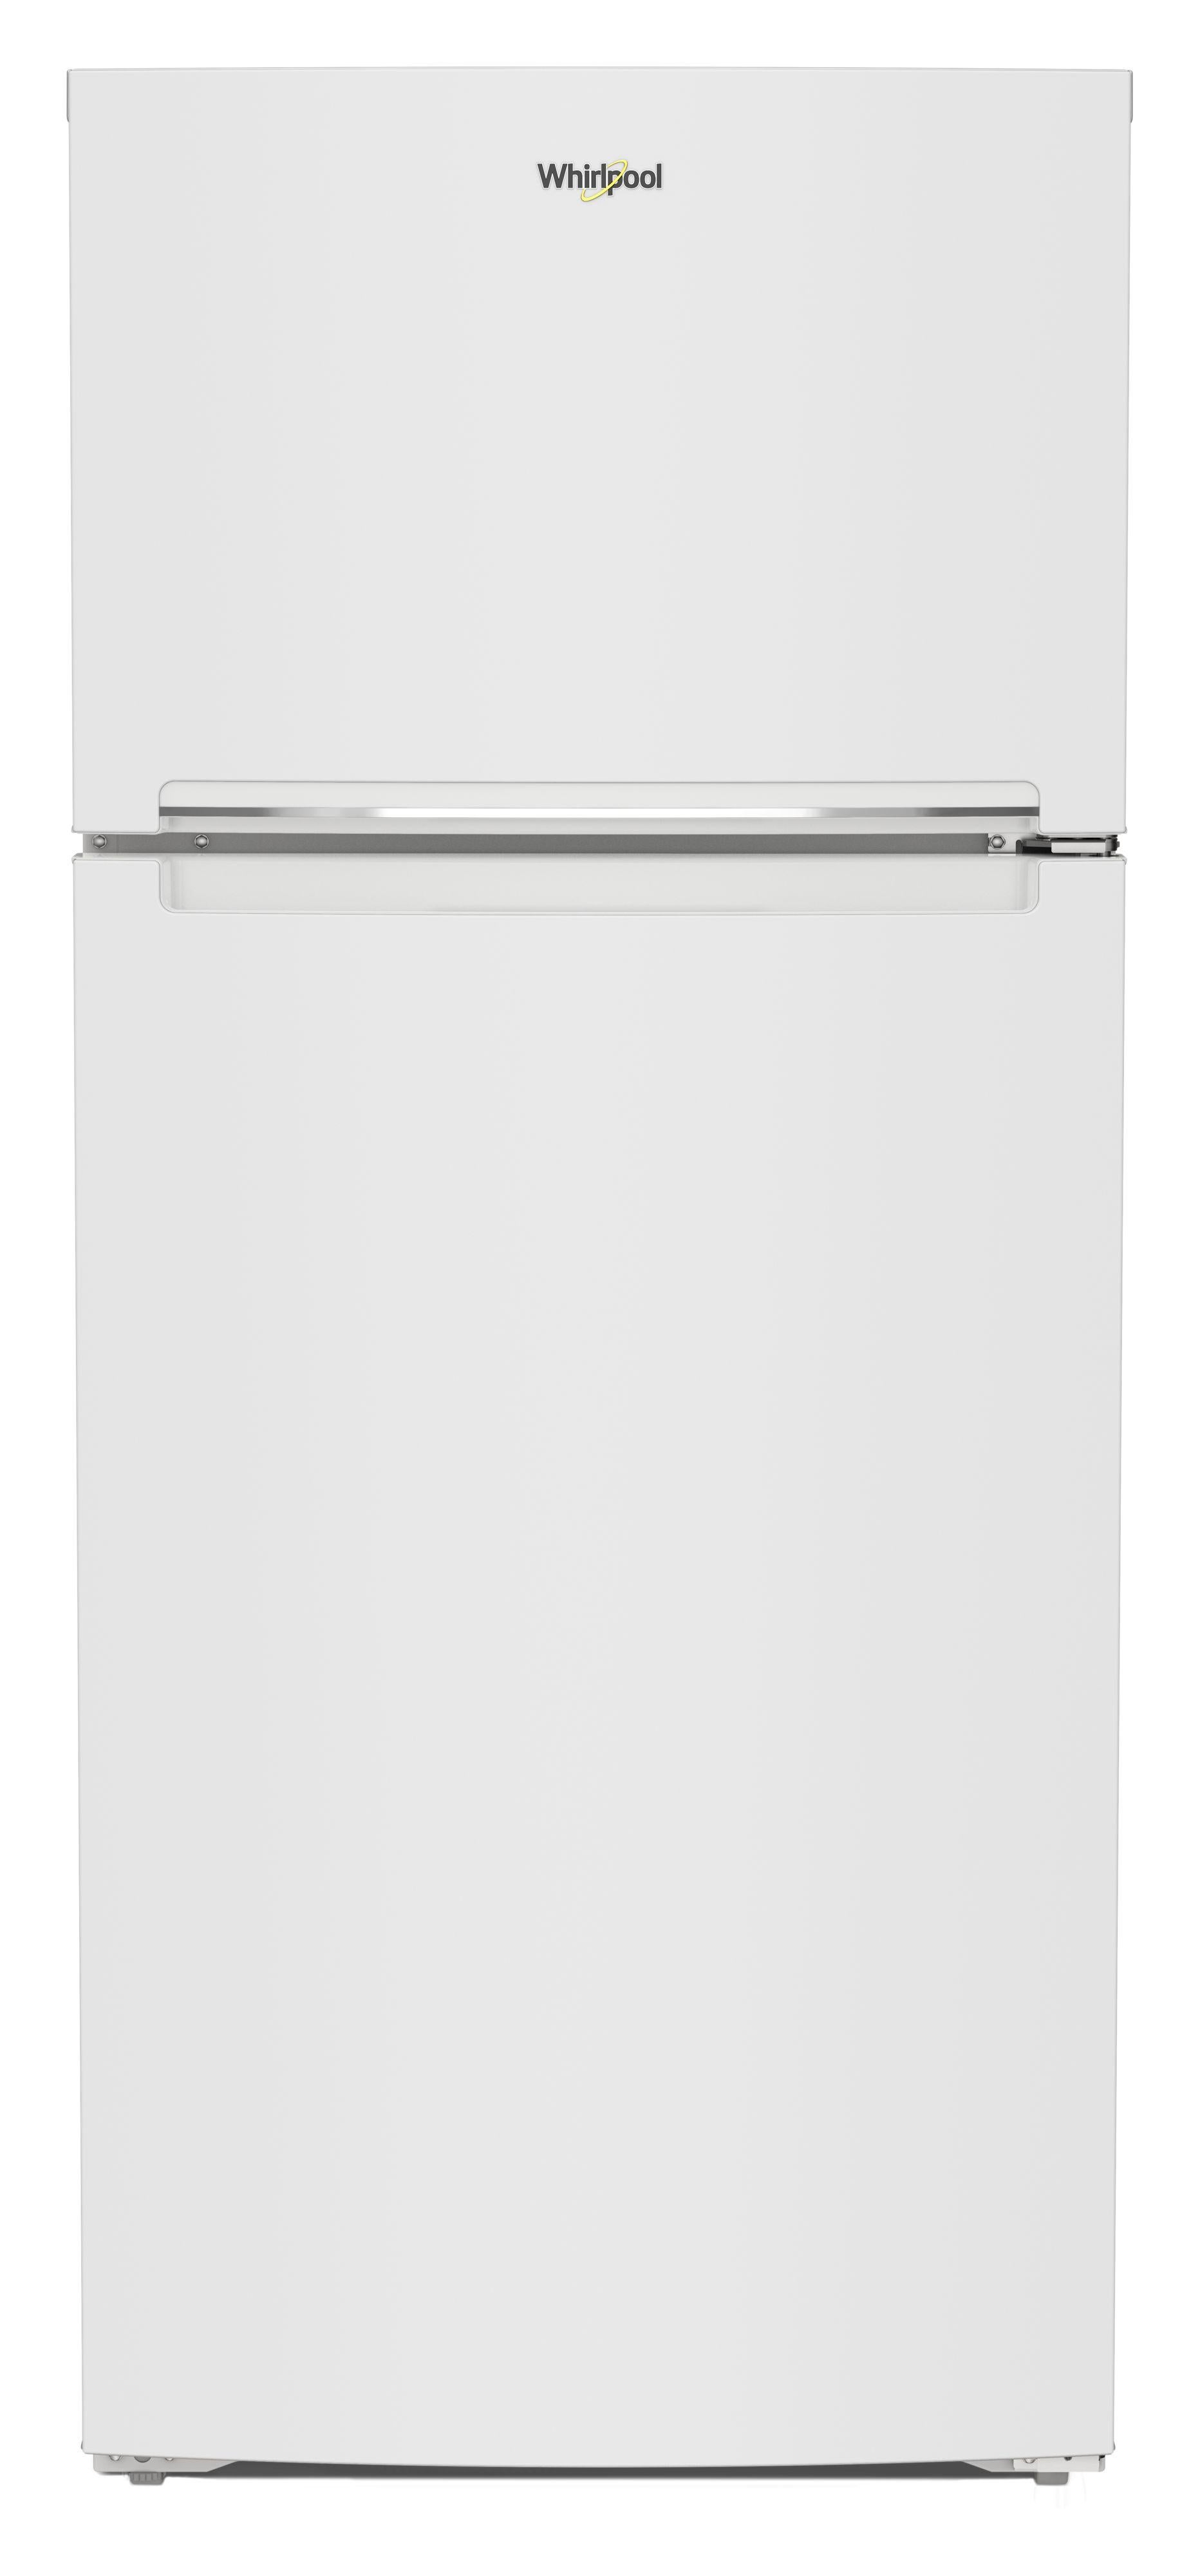 WRTX5028PM by Whirlpool - 28-inch Wide Top-Freezer Refrigerator - 16.3 Cu.  Ft.